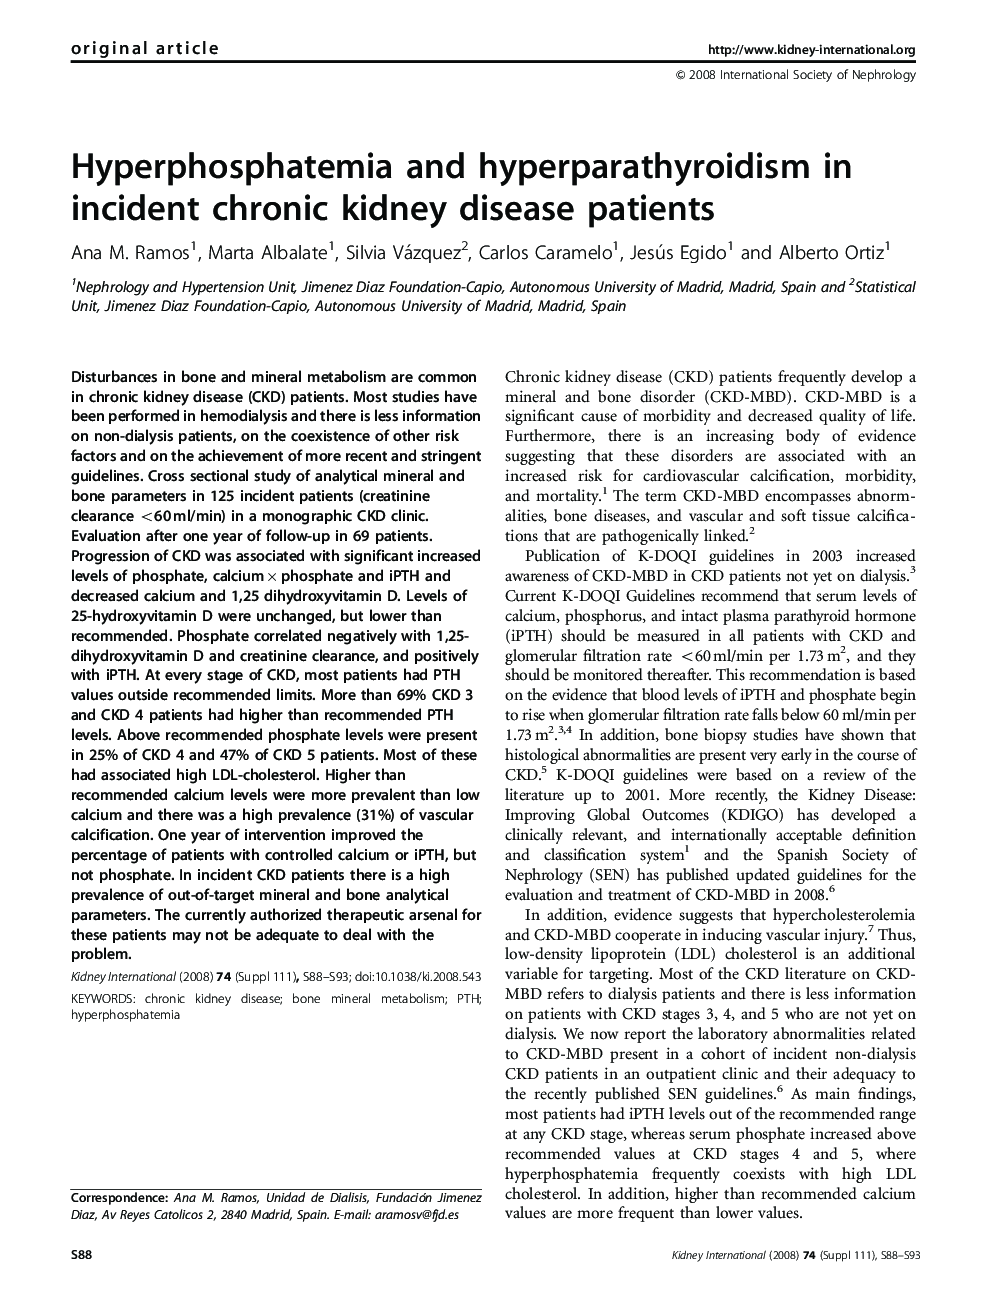 Hyperphosphatemia and hyperparathyroidism in incident chronic kidney disease patients